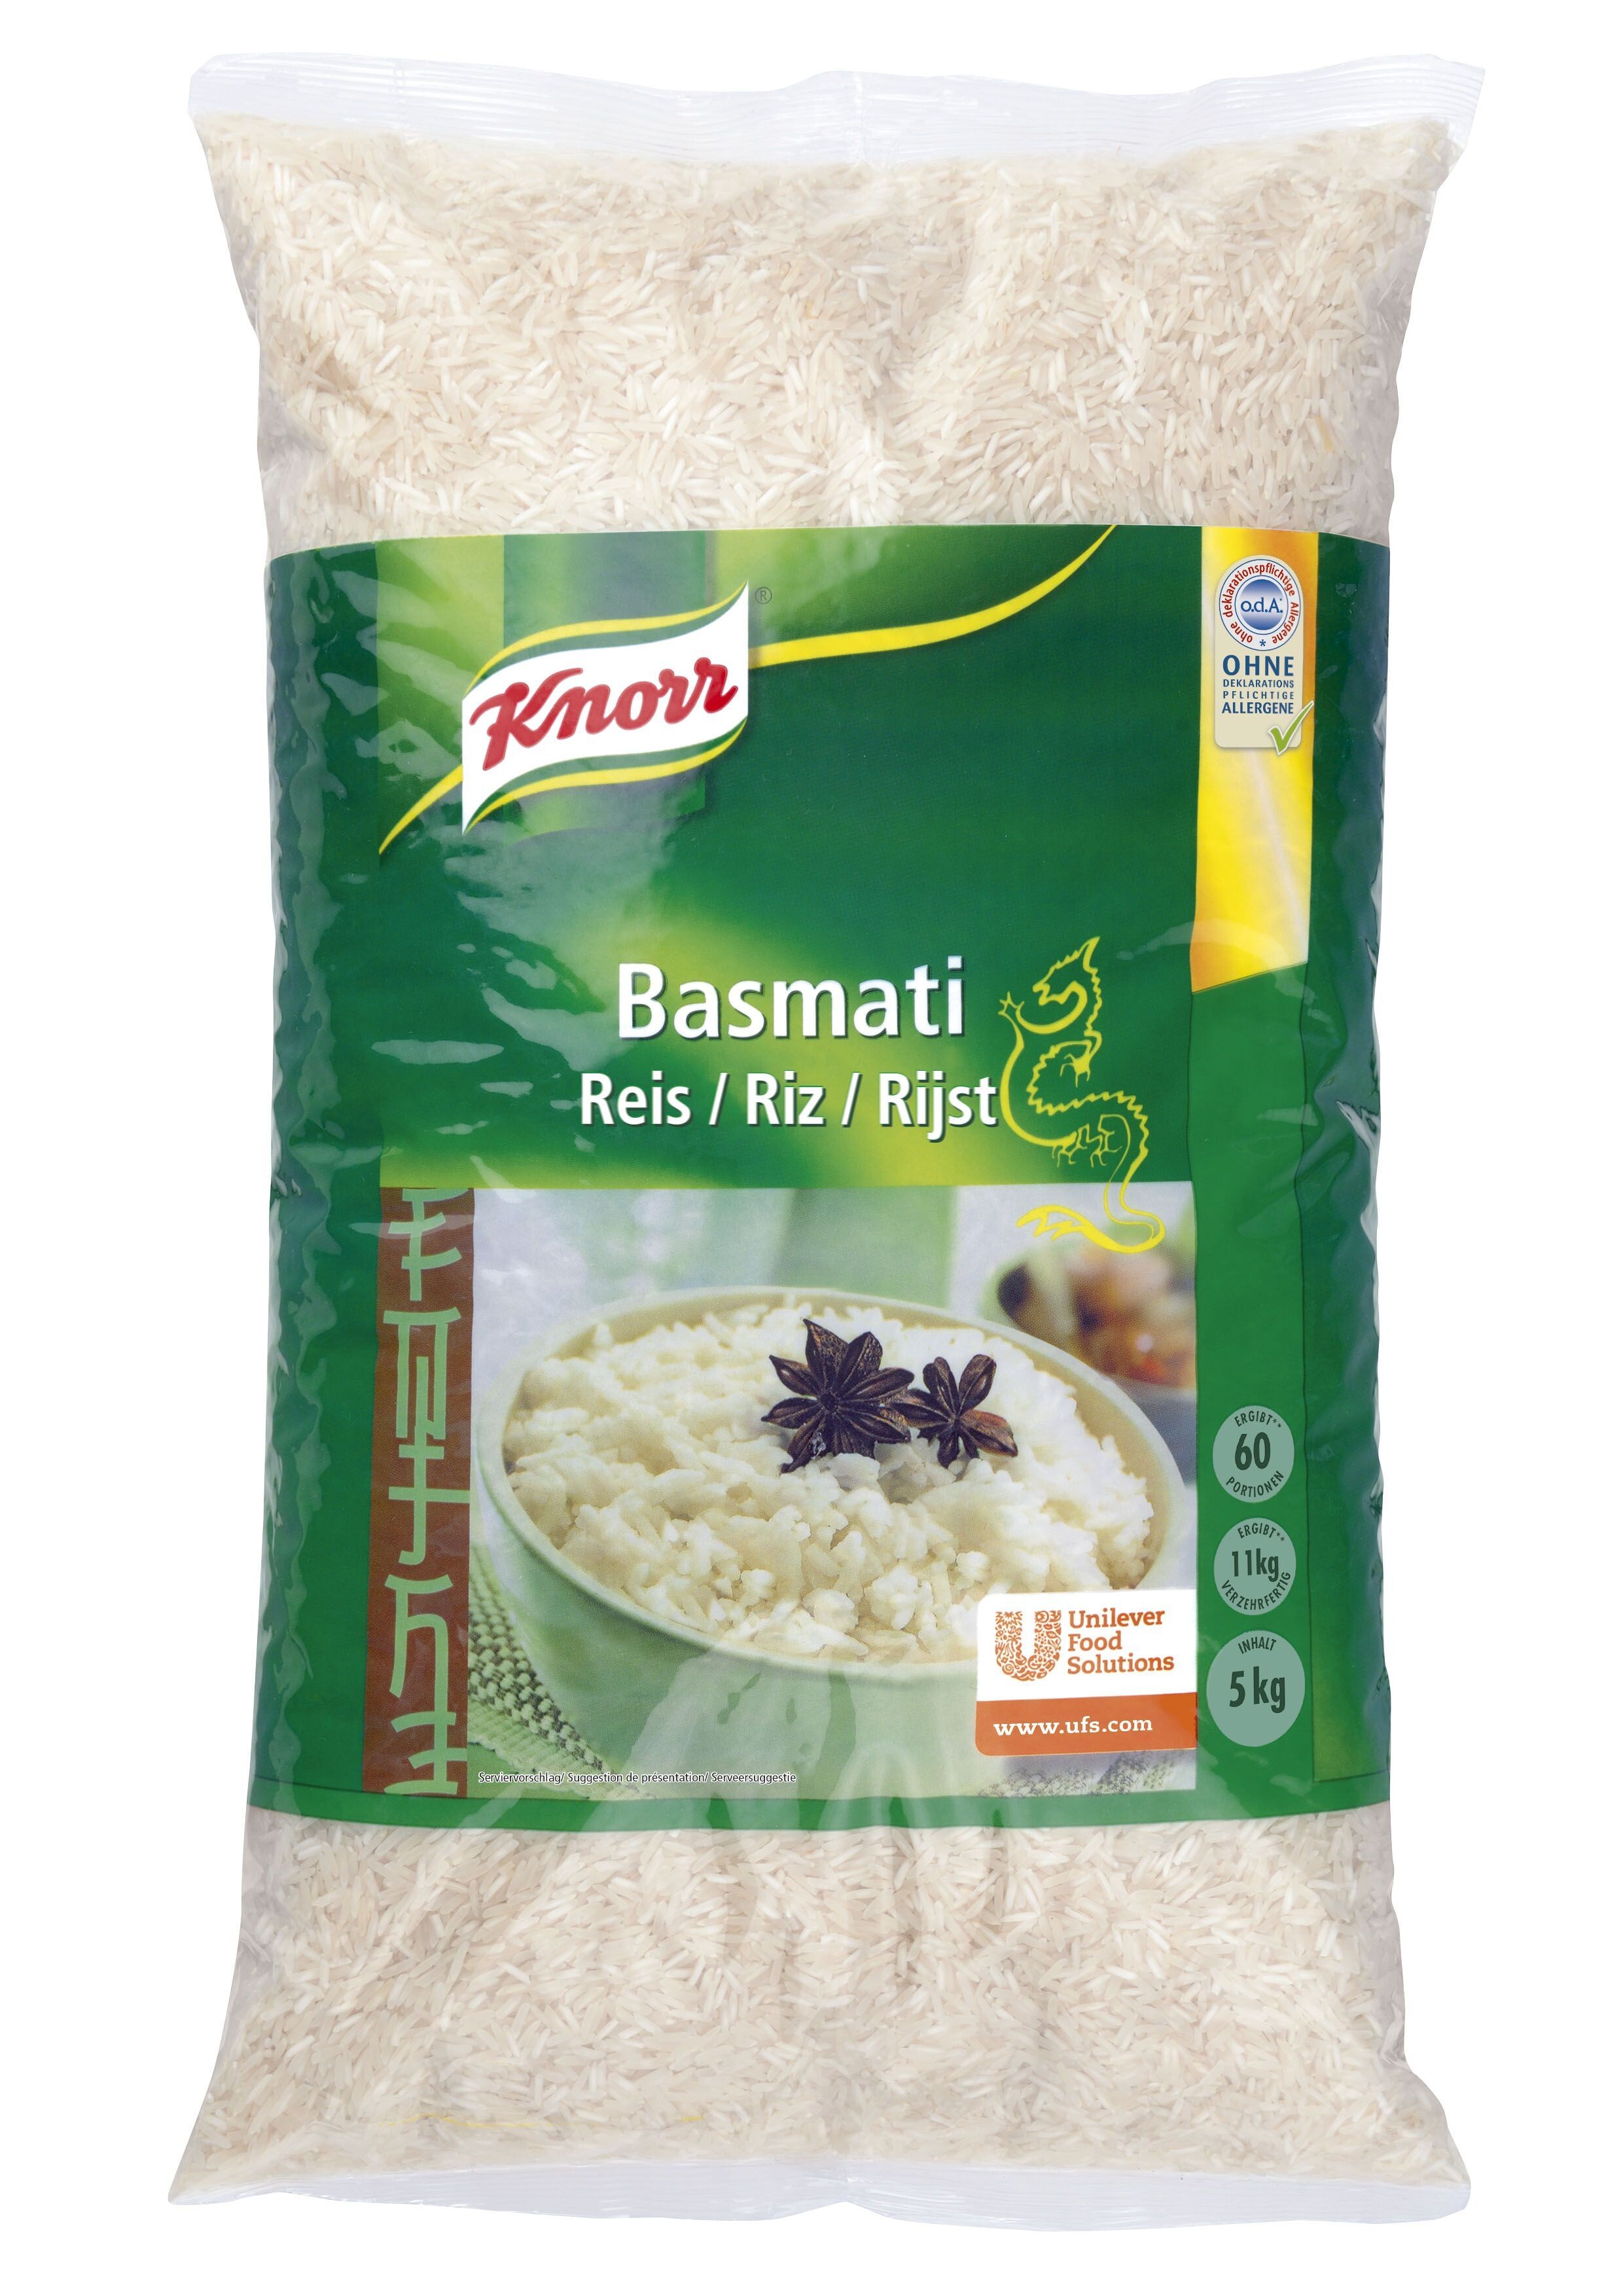 Knorr Basmati rice 5kg